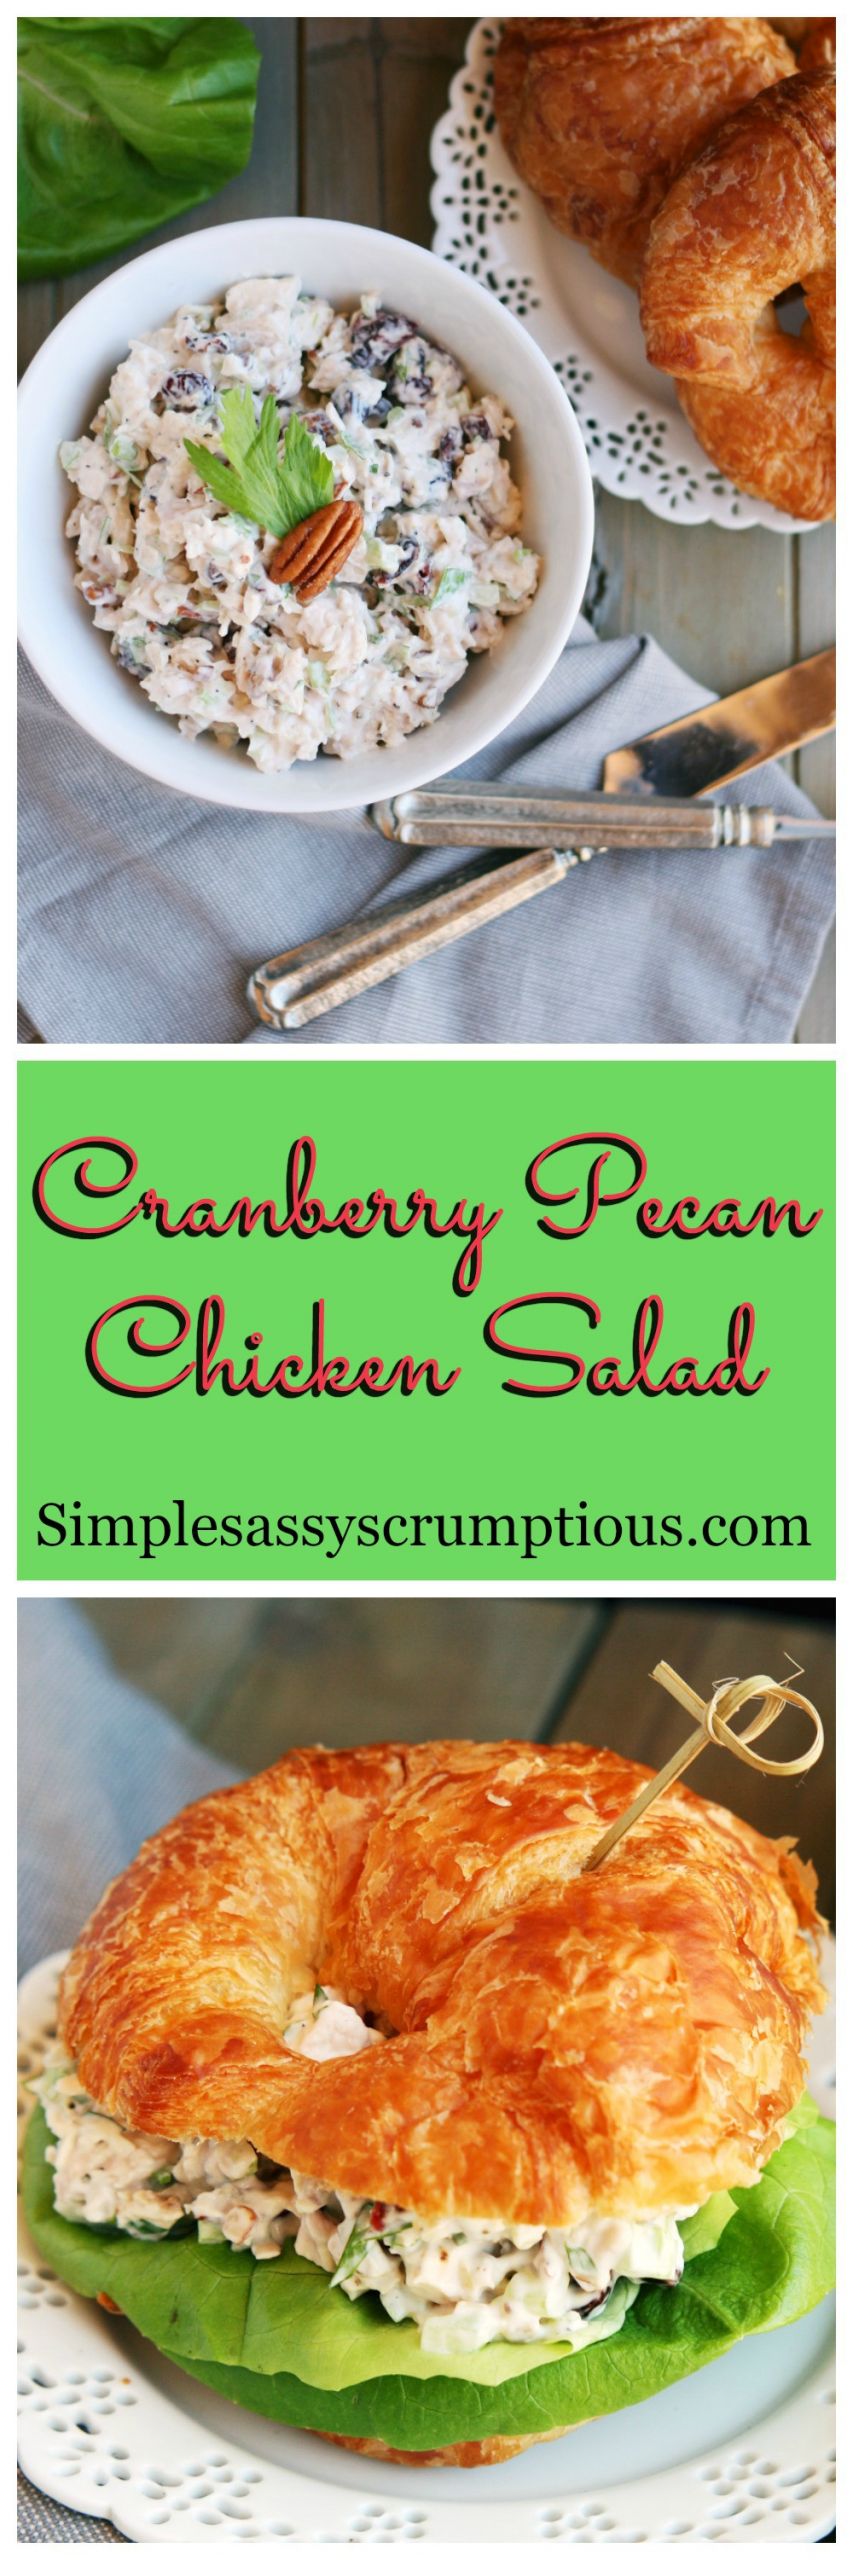 Cranberry Chicken Salad
 Cranberry Pecan Chicken Salad Simple Sassy and Scrumptious